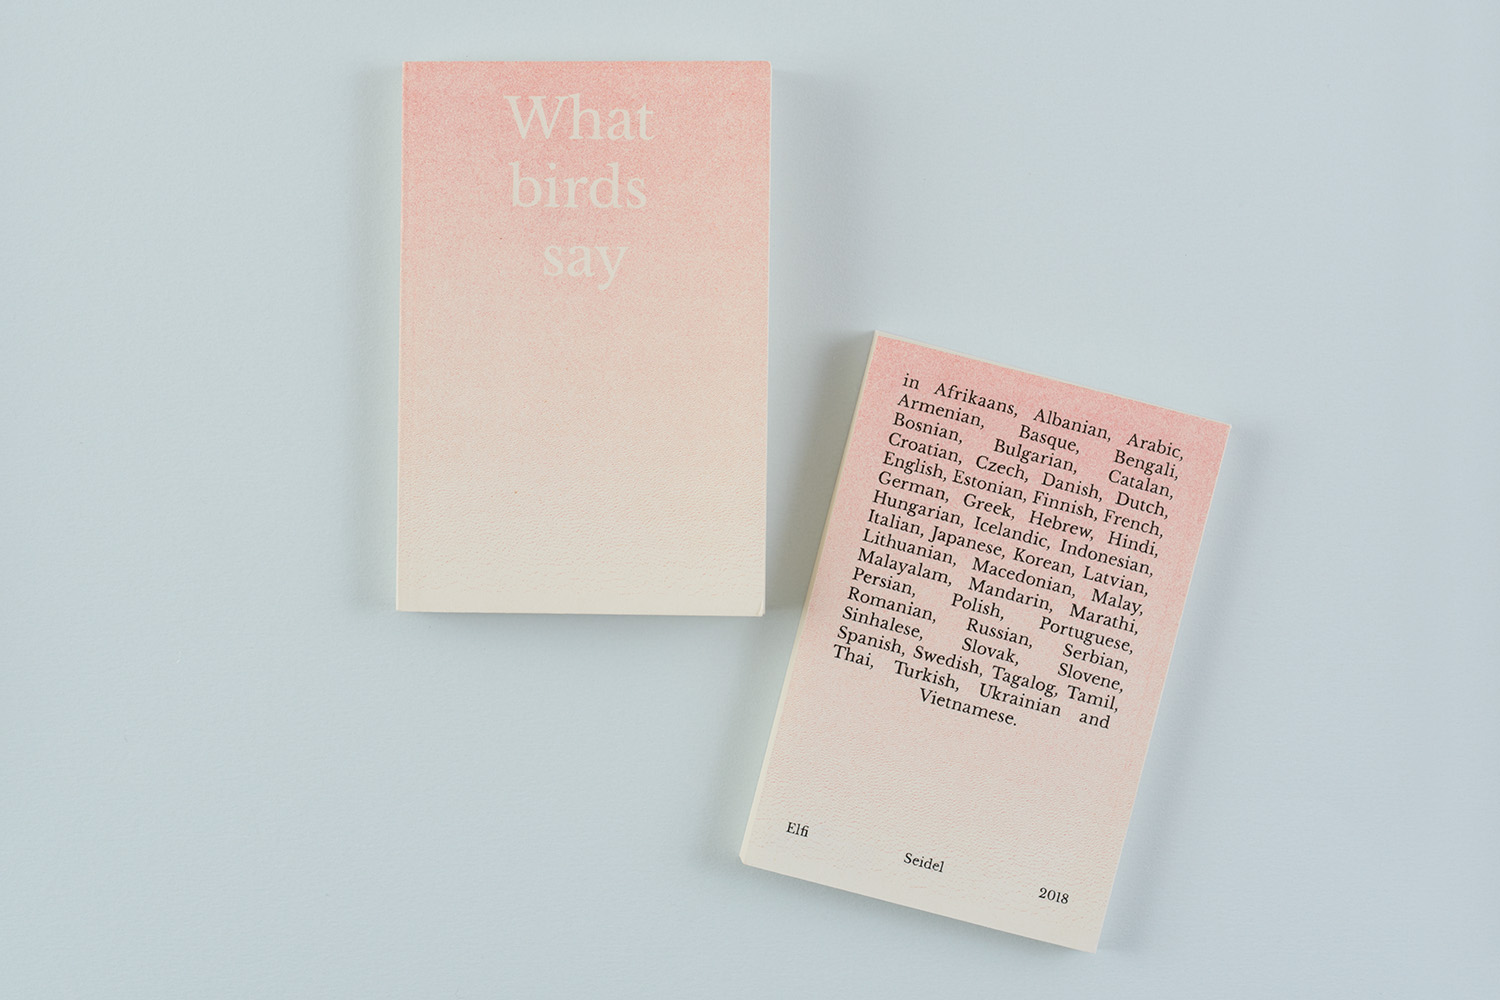 Elfi Seidel, What birds say, 2018